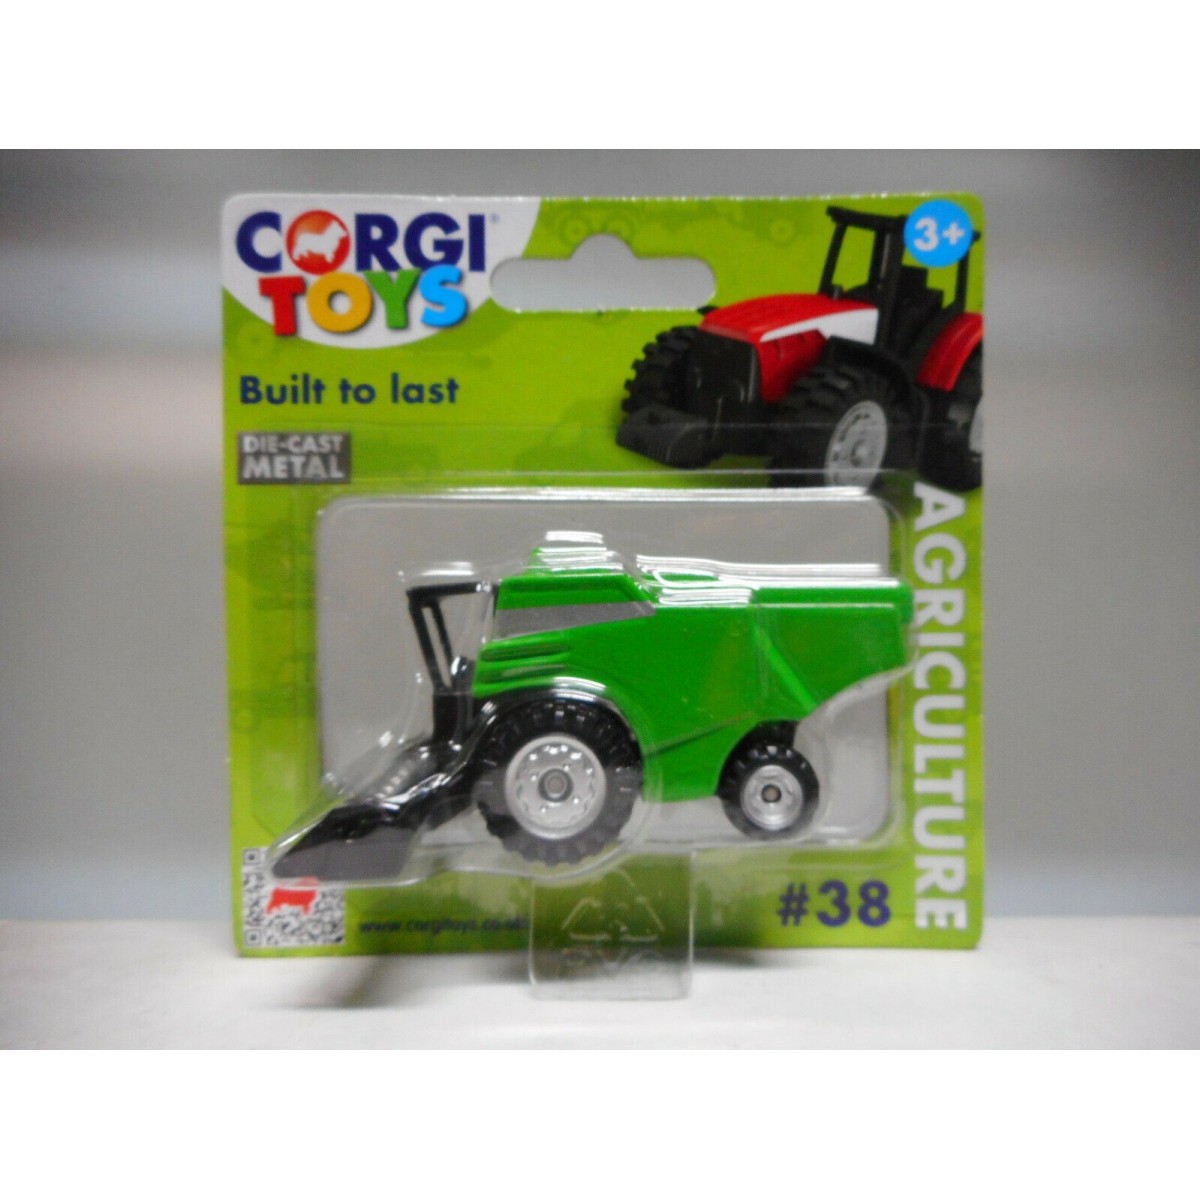 Green Combine Harvester N38 Corgi Toys